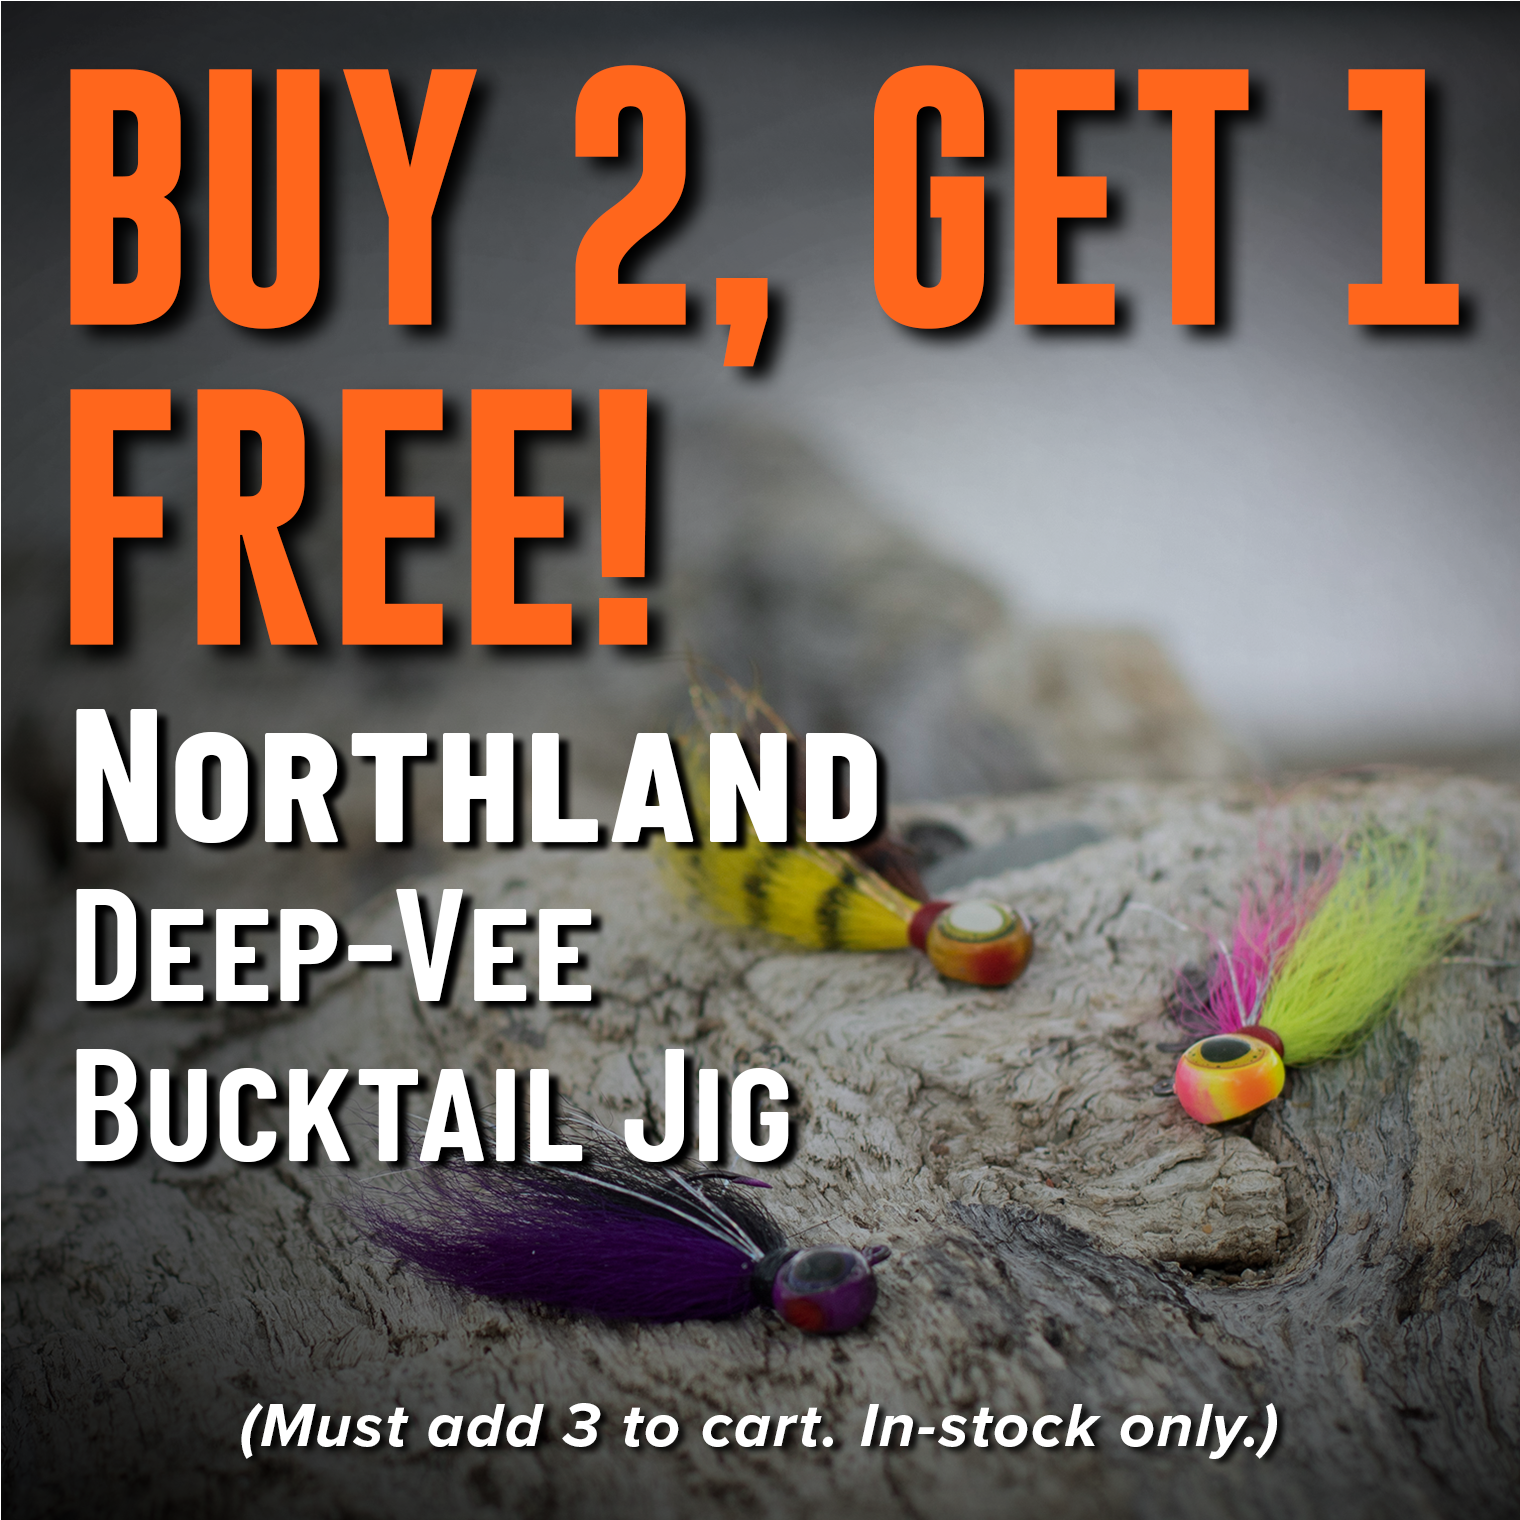 Buy 2, Get 1 Free! Northland Deep-Vee Bucktail Jig